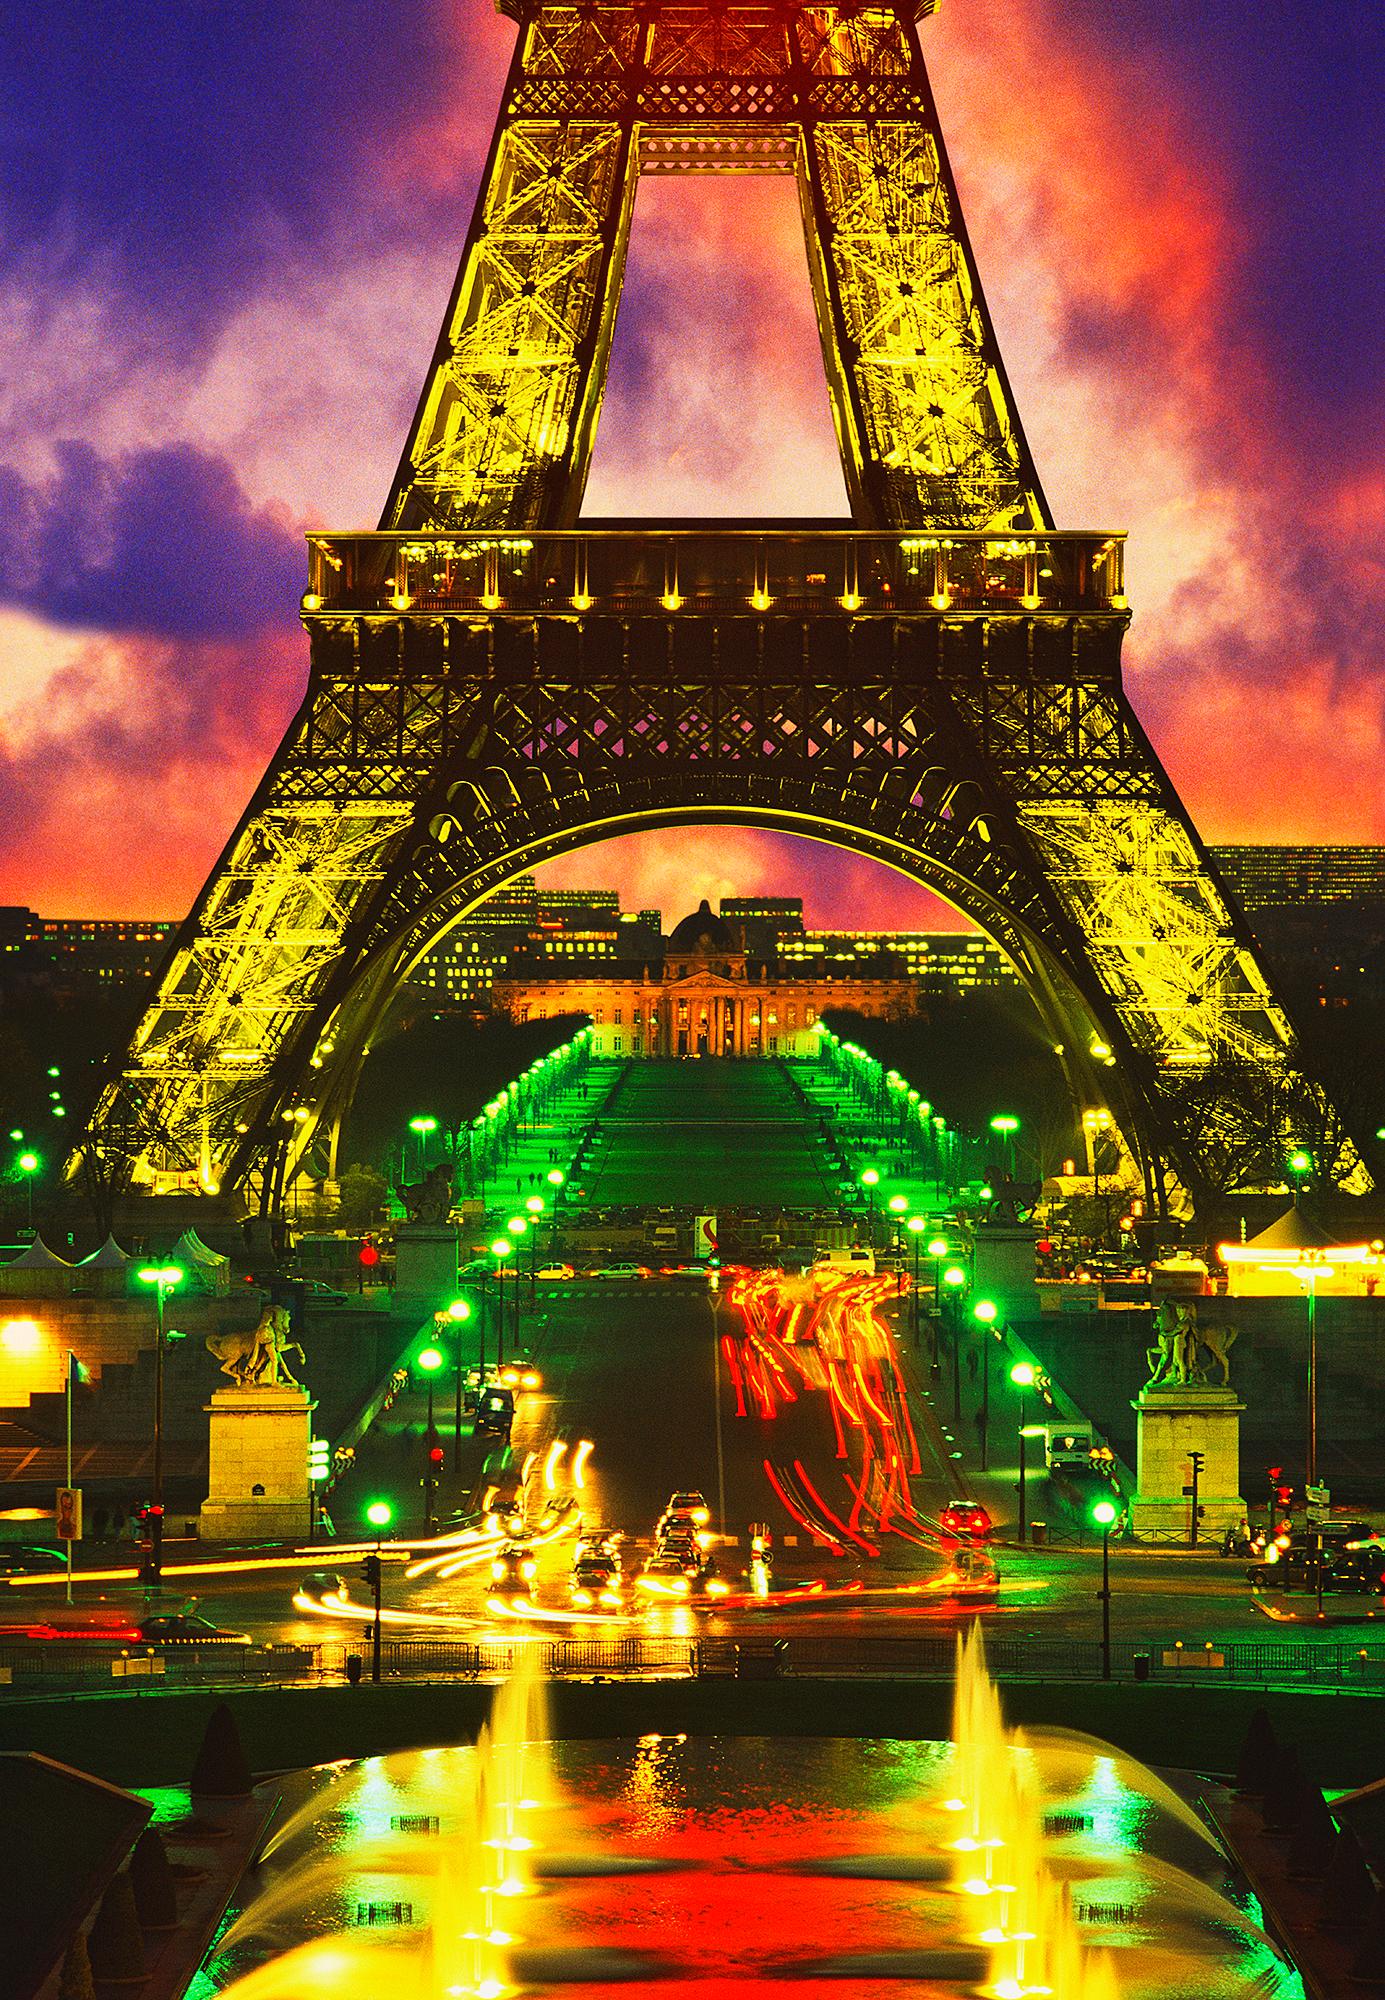 Eiffel Tower At Dusk With Dramatic Sky, Paris France